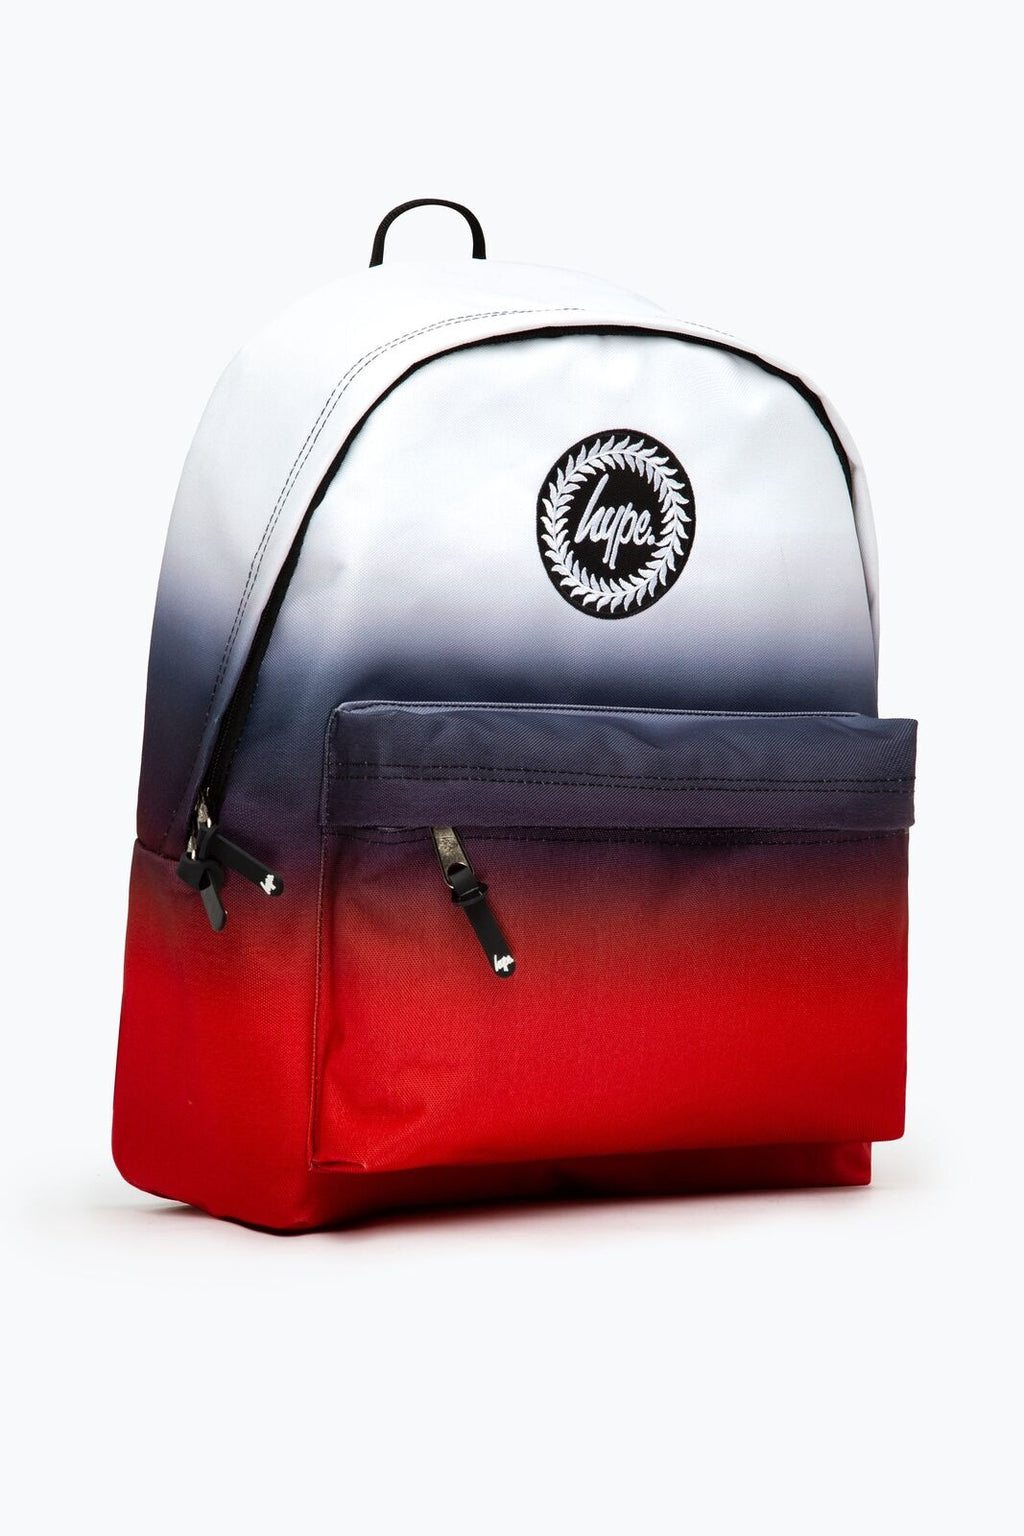 Hype Black & Red Gradient Backpack